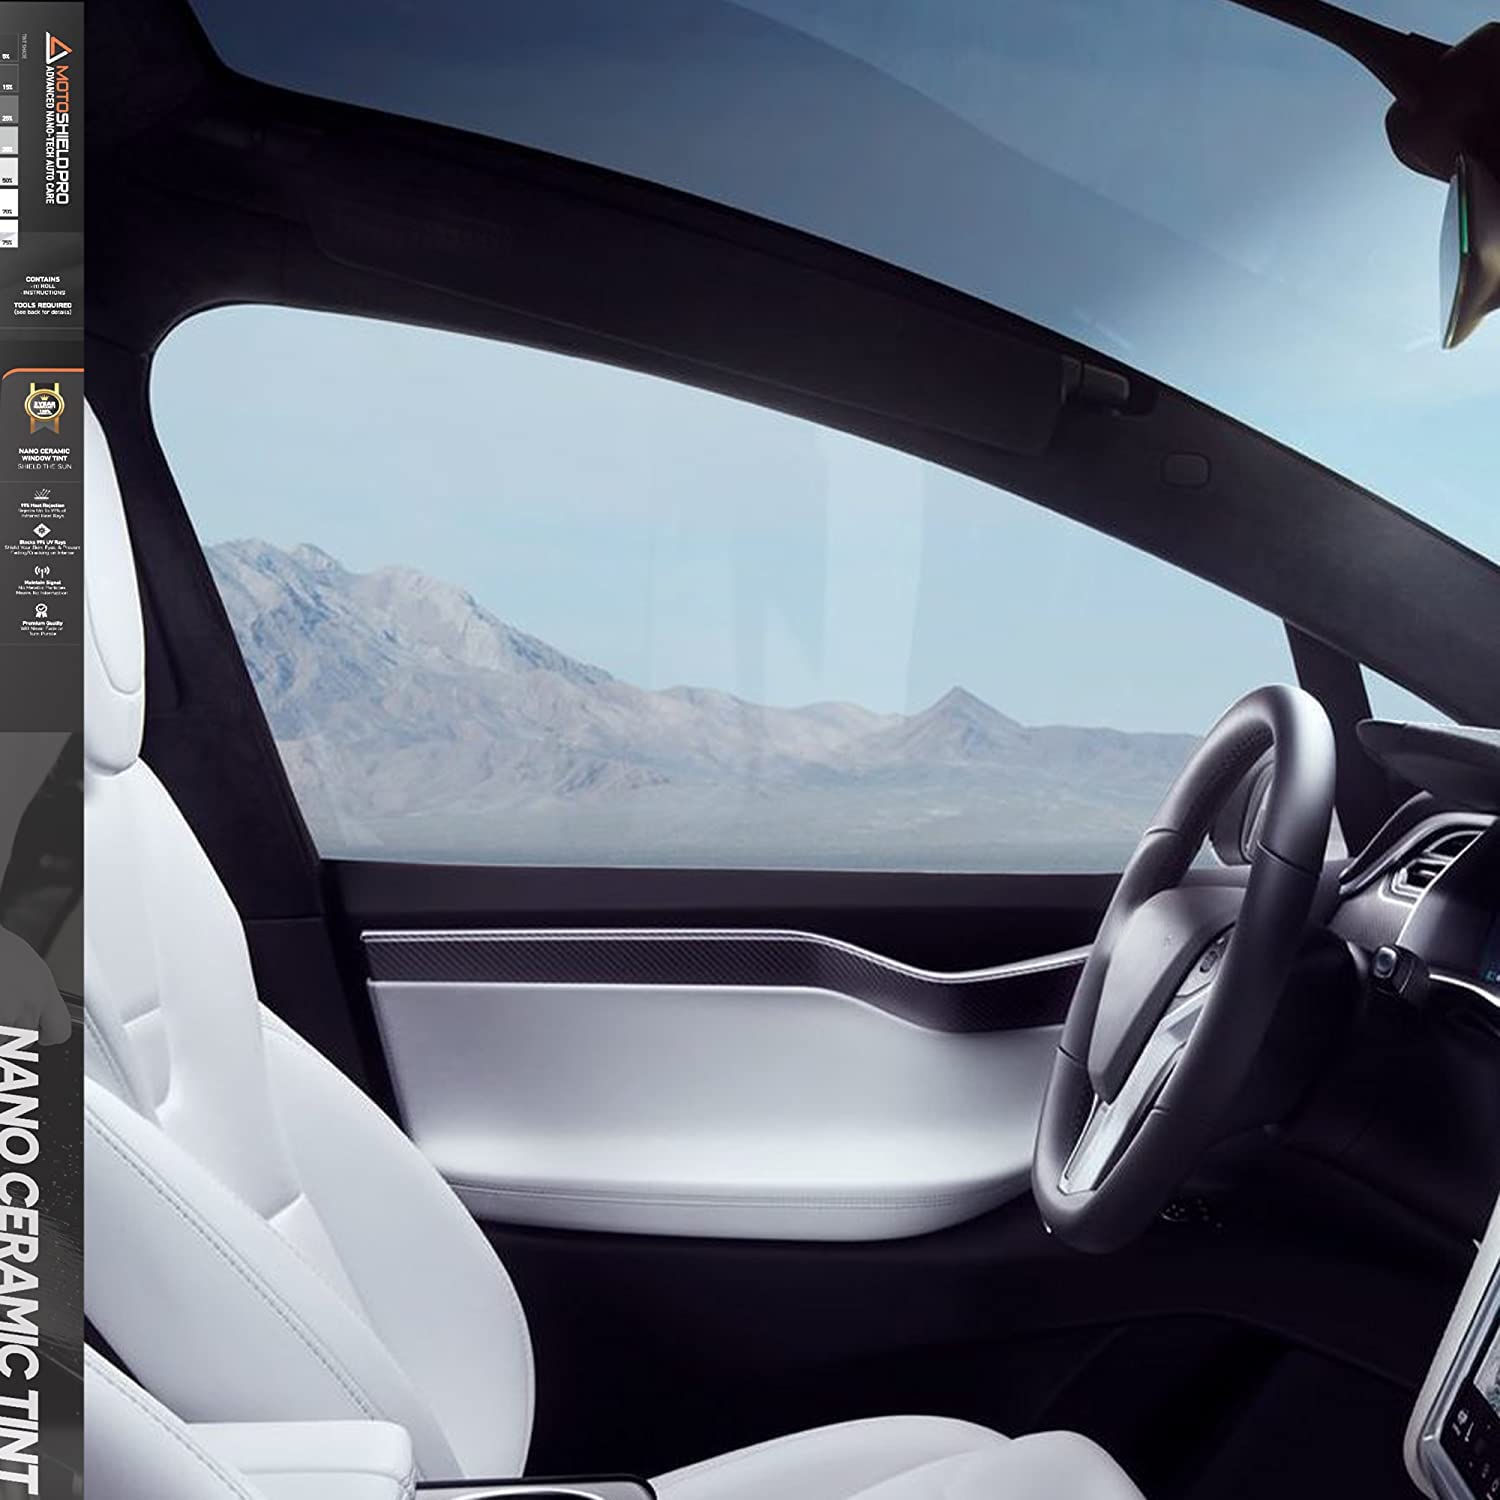 MotoShield Pro プレミアムプロ仕様 2ミル セラミックウィンドウティントフィルム 自動車用 赤外線熱と紫外線を99%削減 70% VLT (24インチ x 5フィートロール)